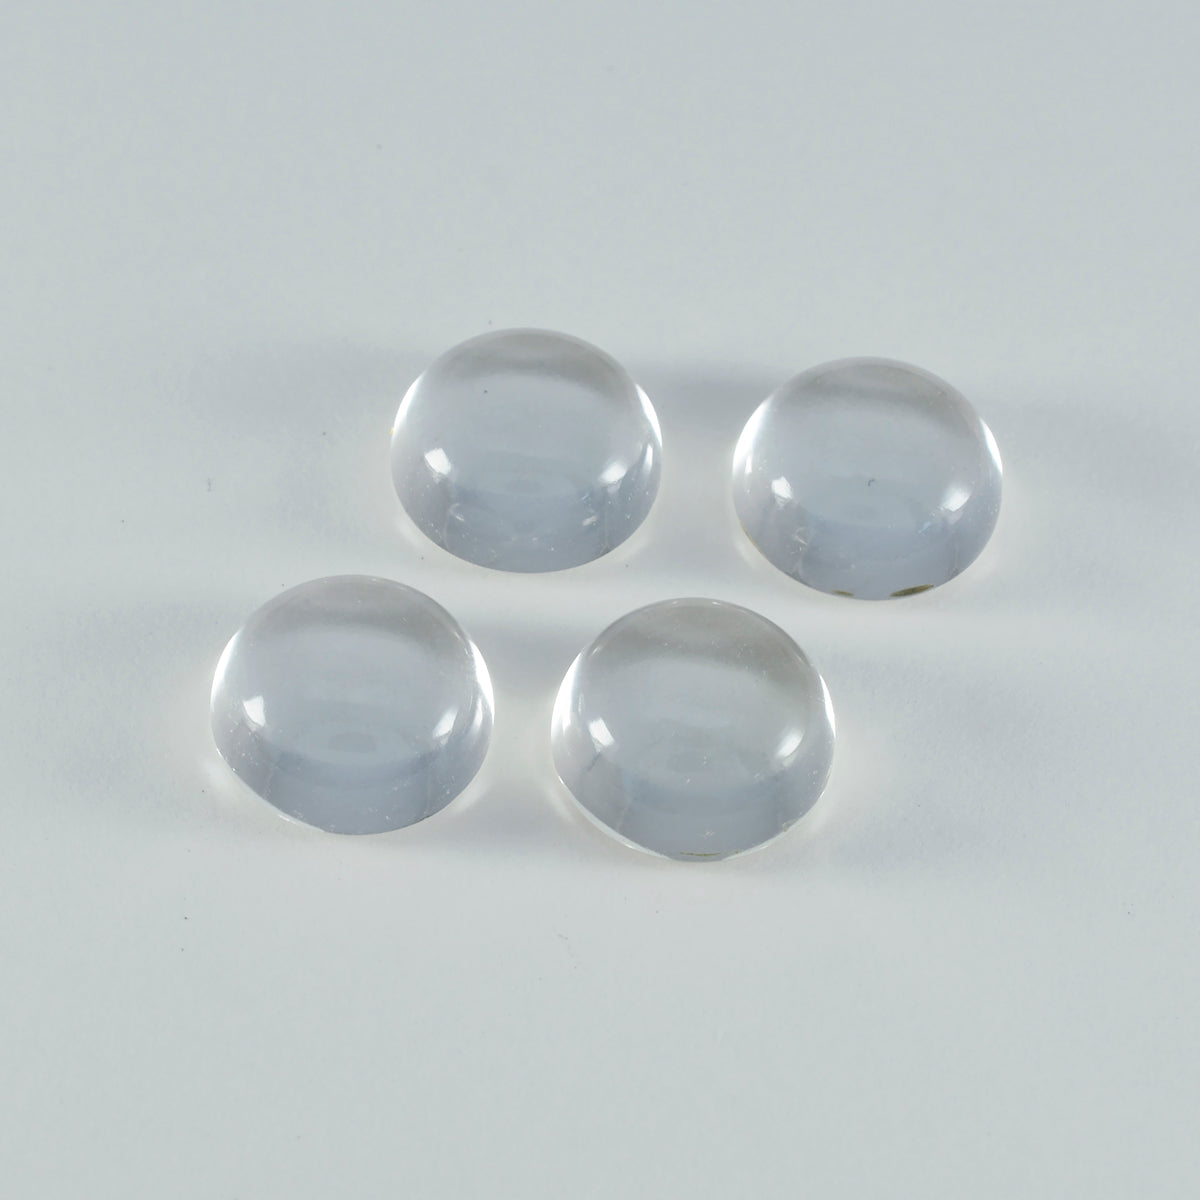 Riyogems 1PC White Crystal Quartz Cabochon 9x9 mm Round Shape Good Quality Stone